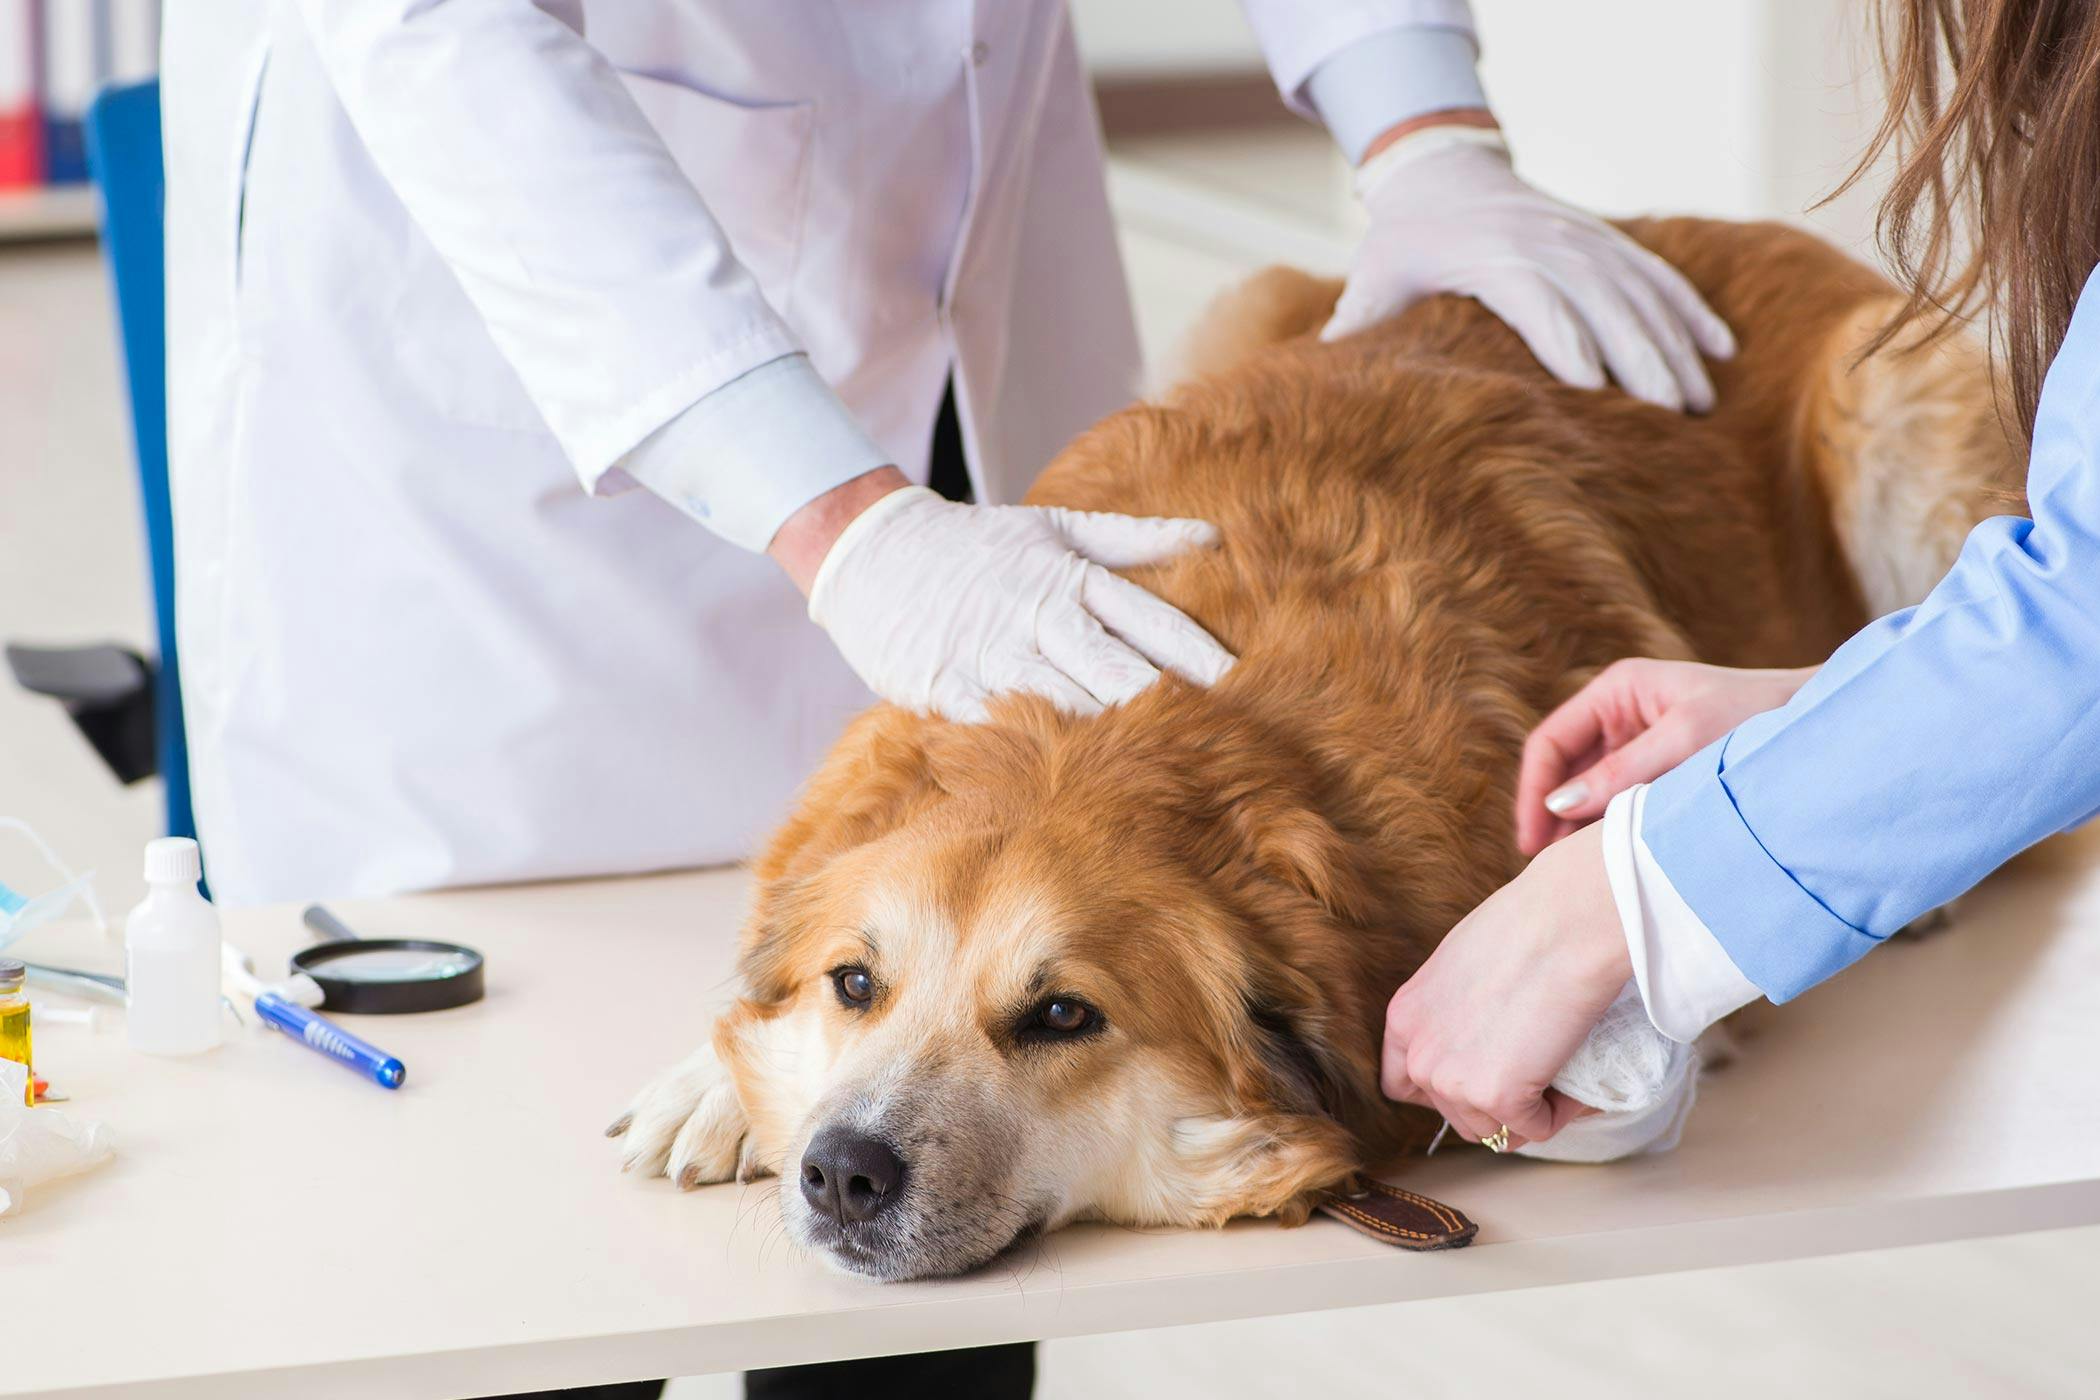 Dogs for tramadol in versus ears pain gabapentin